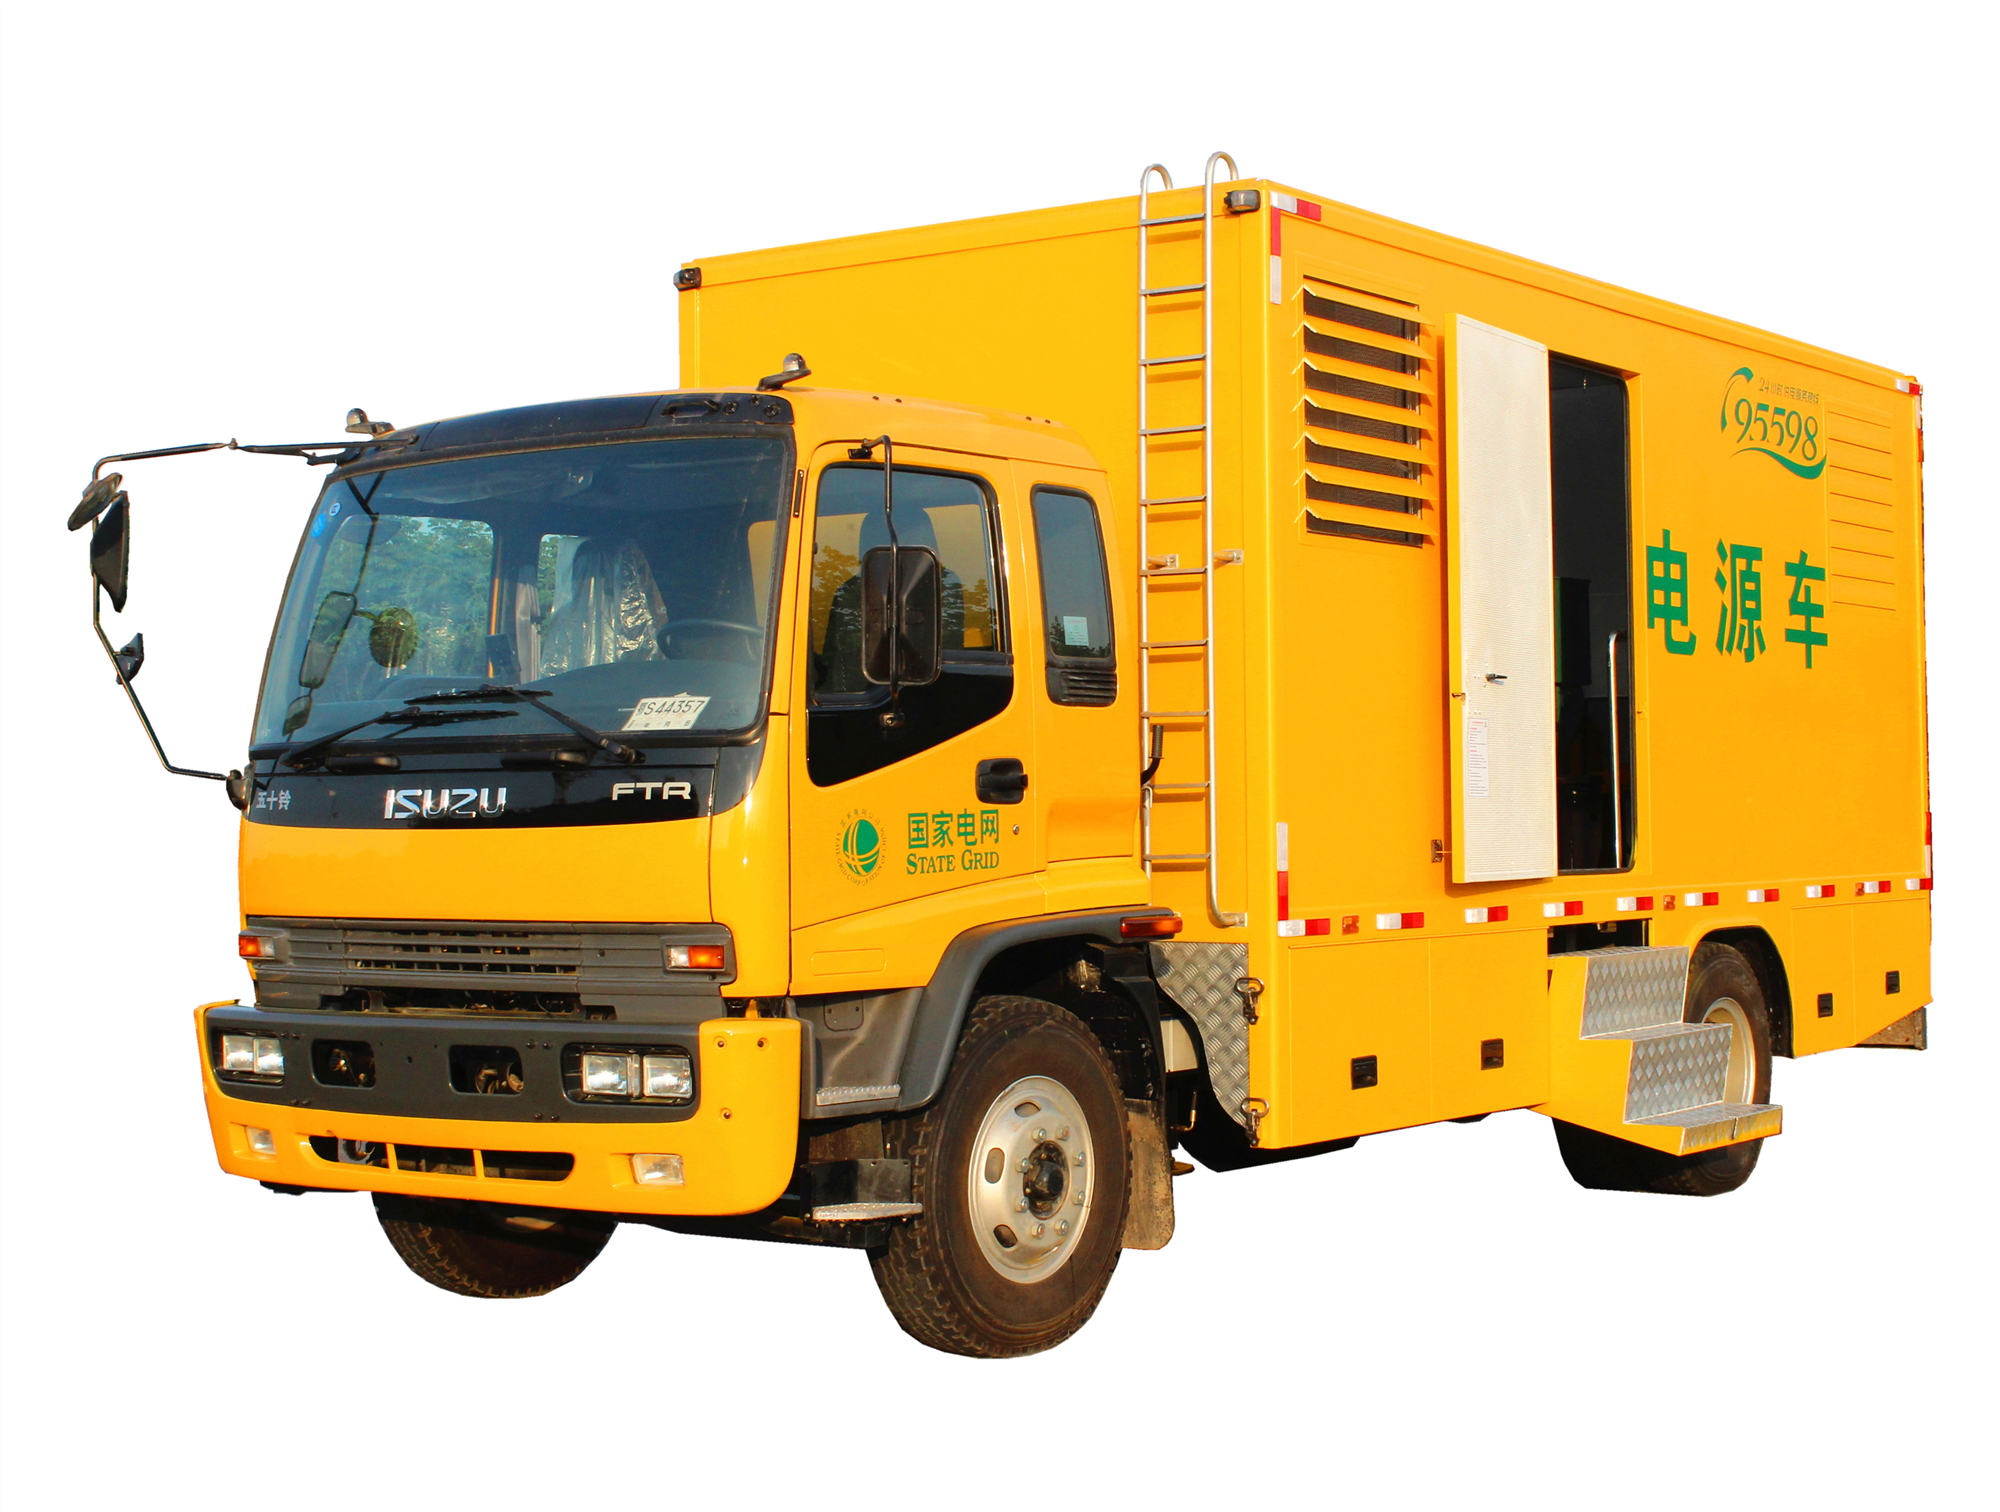 Isuzu maintenance mobile workshop trucks